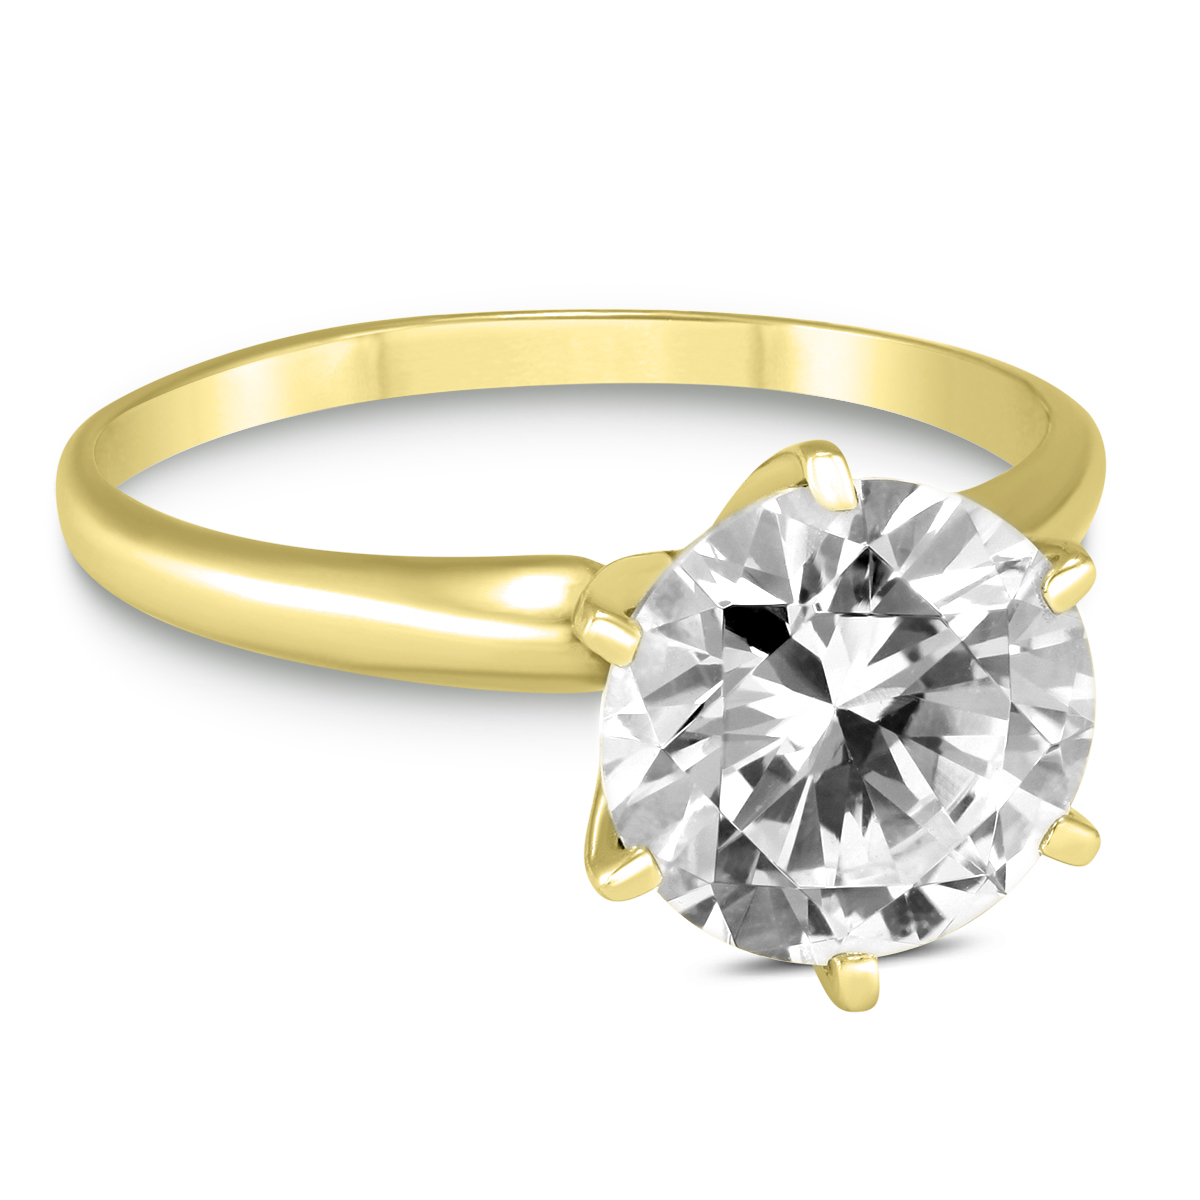 szul.com PREMIUM QUALITY - 1 Carat Diamond Solitaire Ring in 18K Yellow Gold (E-F Color, SI1-SI2 Clarity)